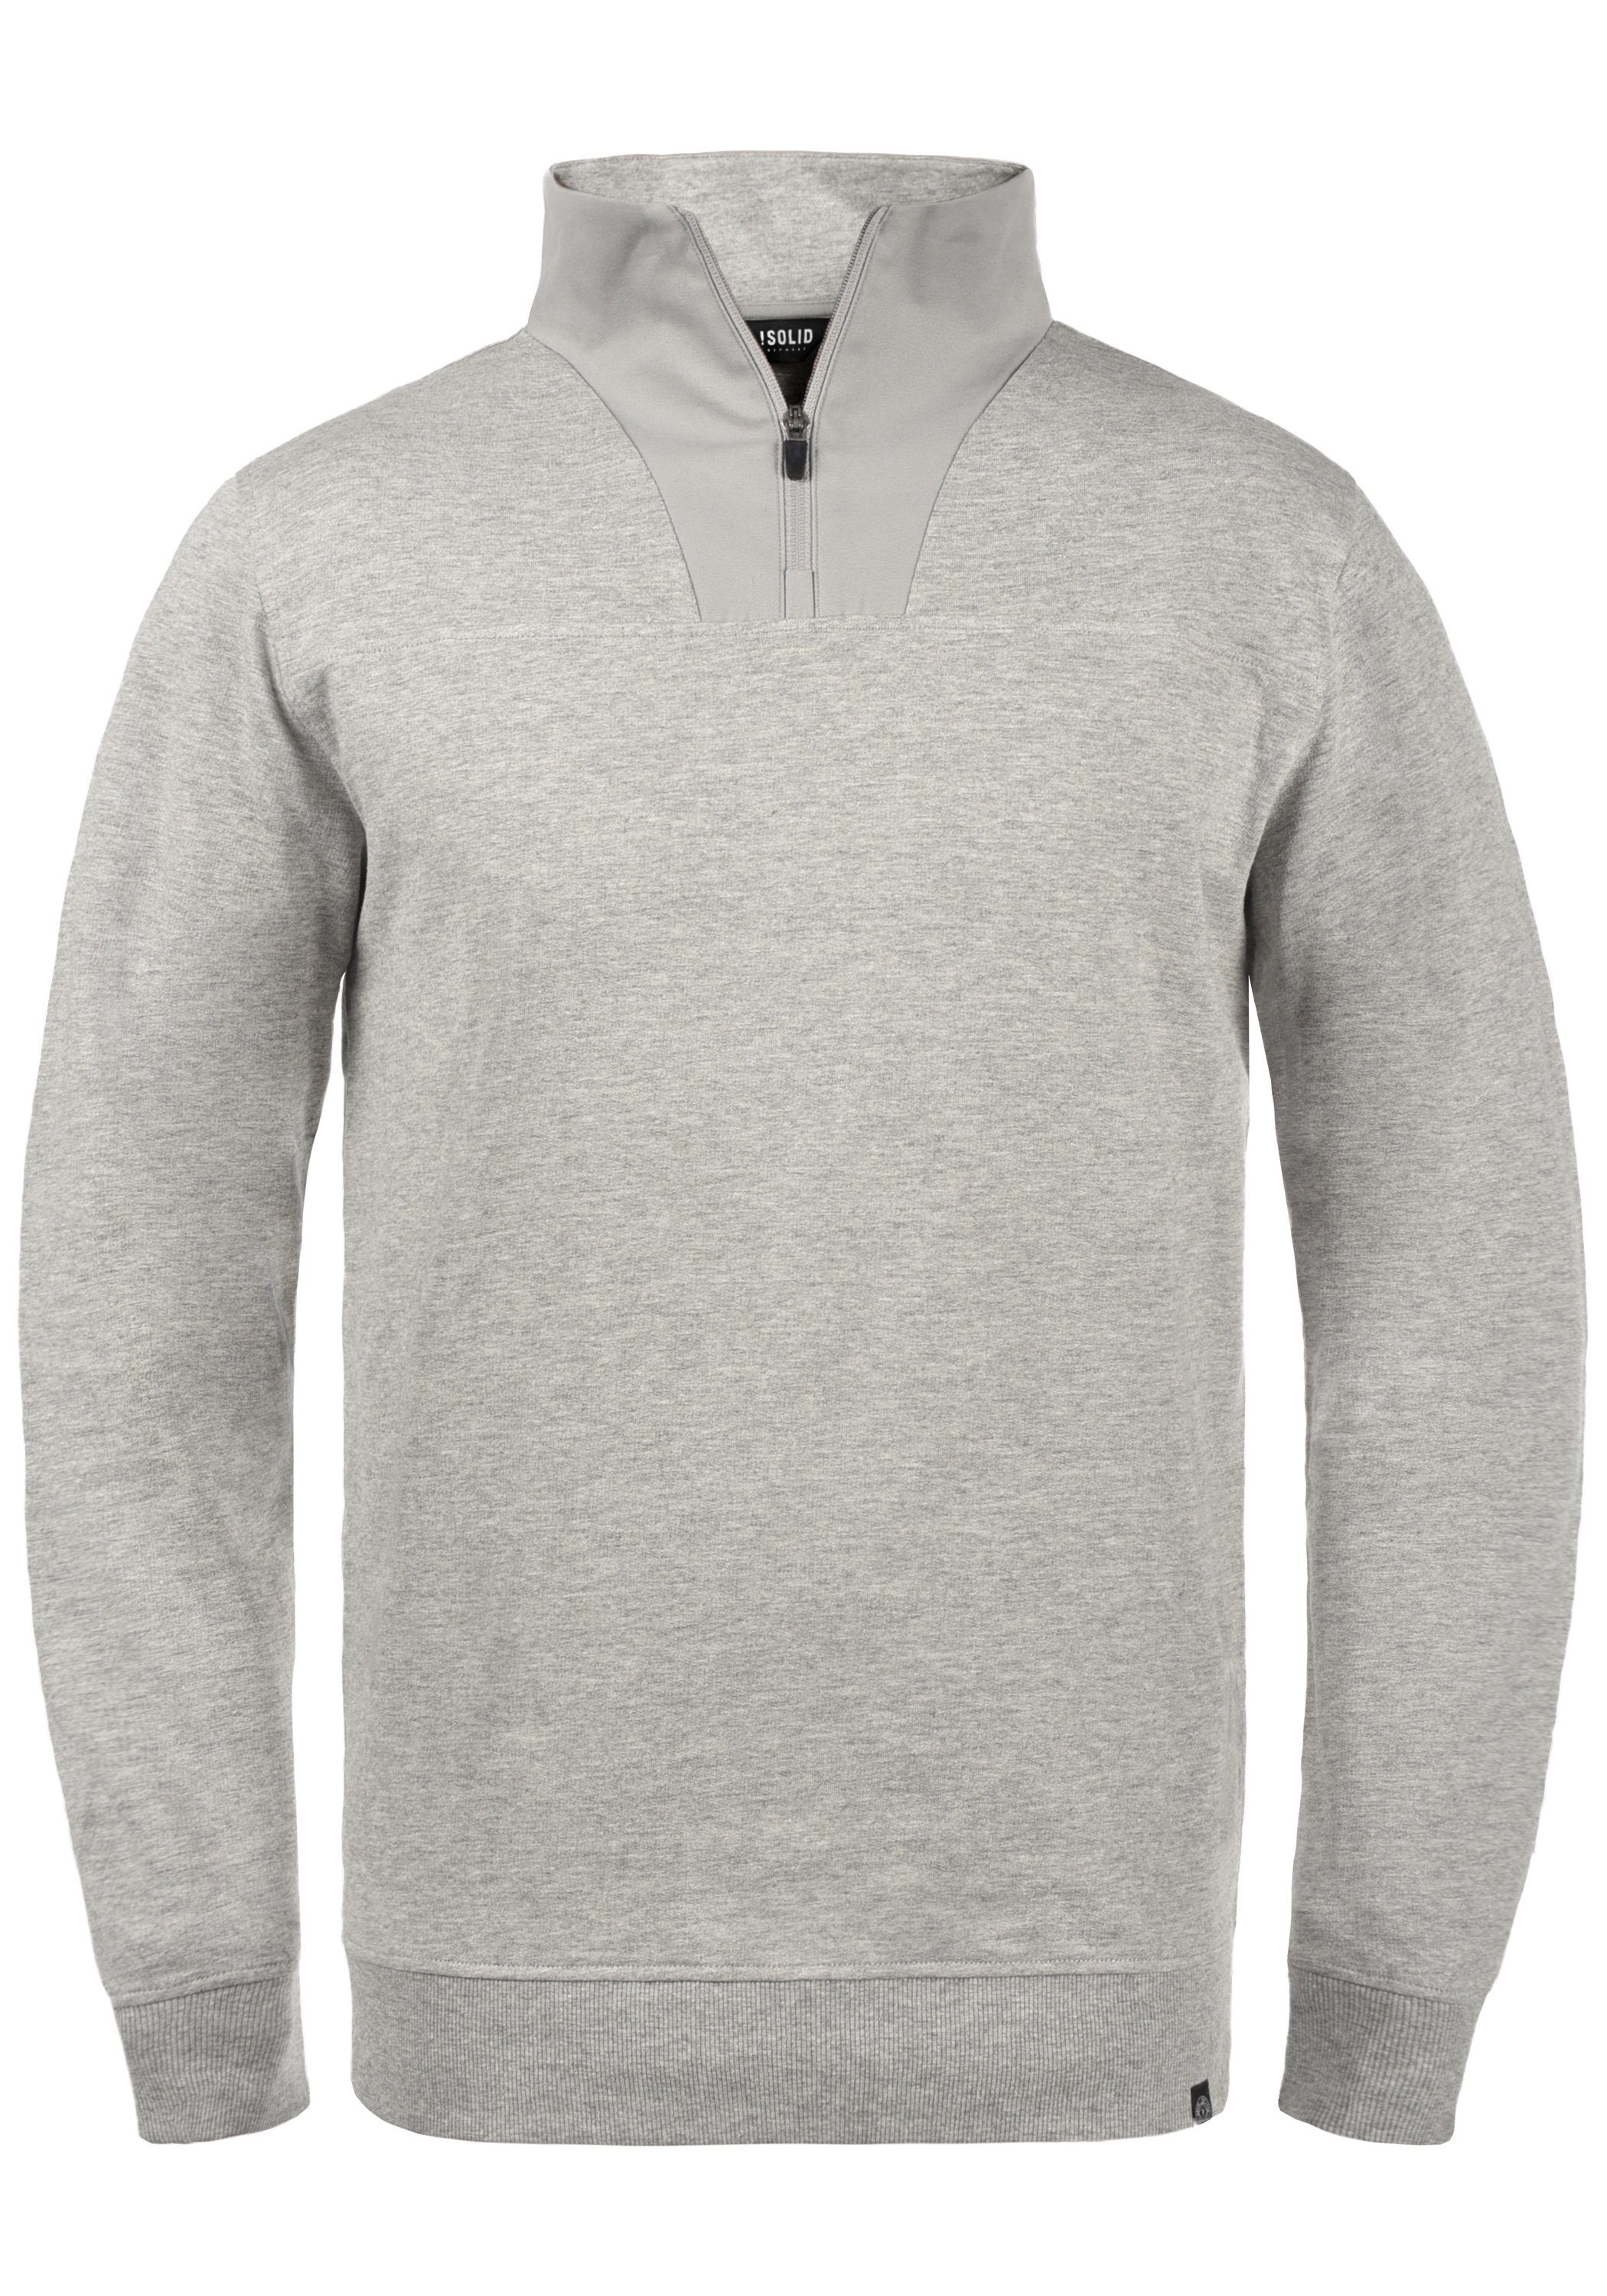 [Sonderverkaufsartikel] Solid Sweatshirt SDJorke Sweatpulli Melange Grey (1840051)